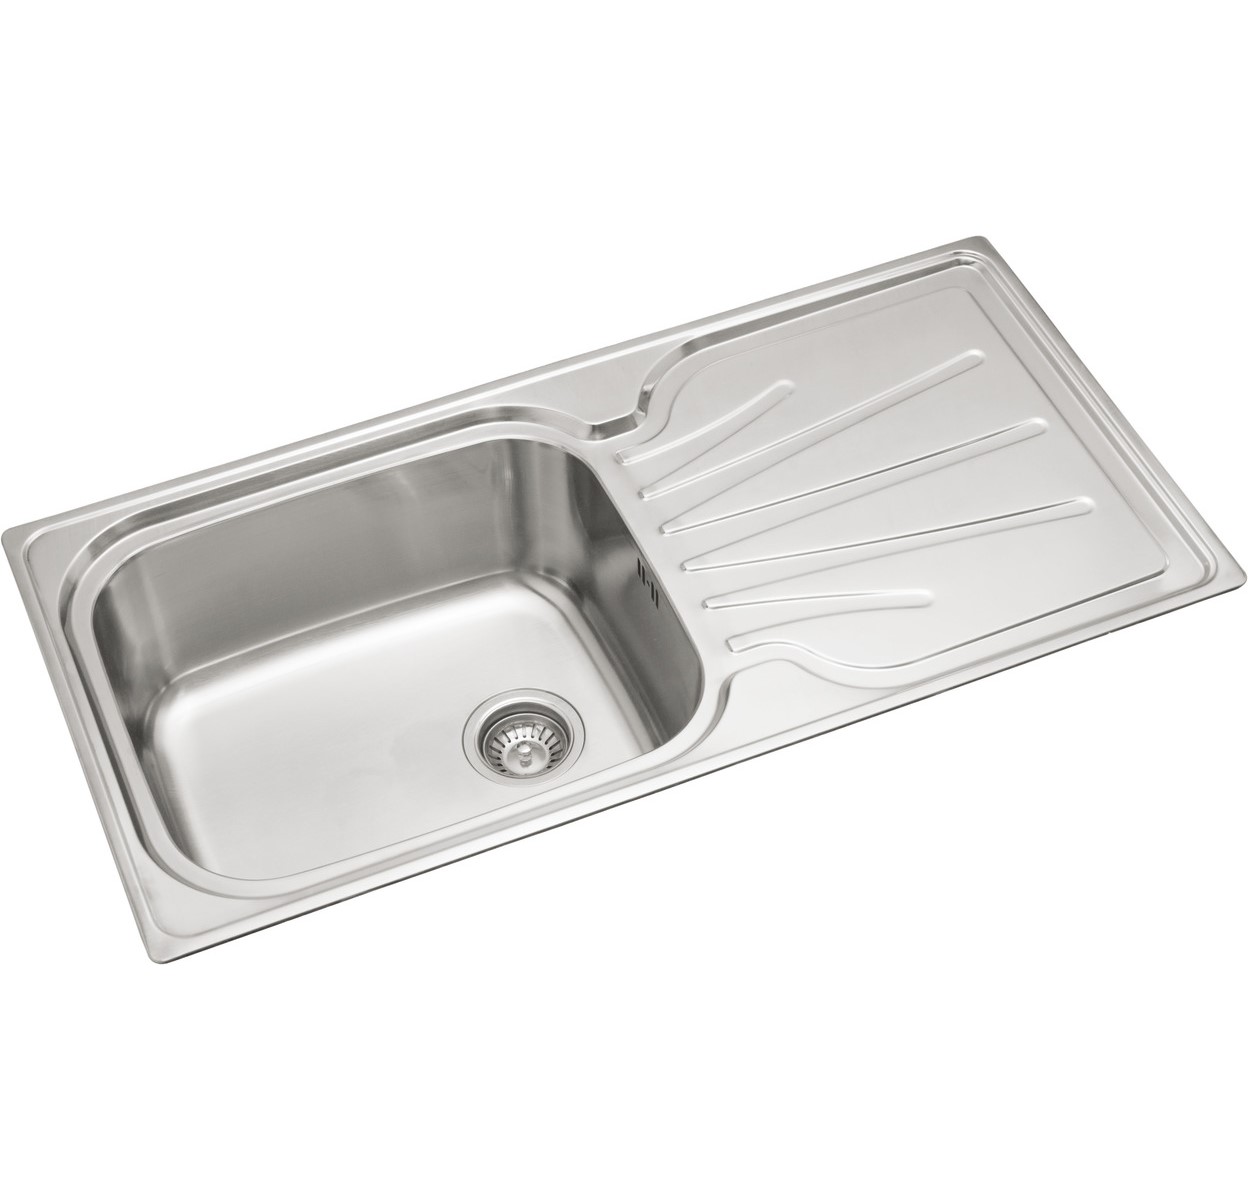 Hafele Splash CAMELIA EL  Single Bowl Sink With Drain Board  - 49539356